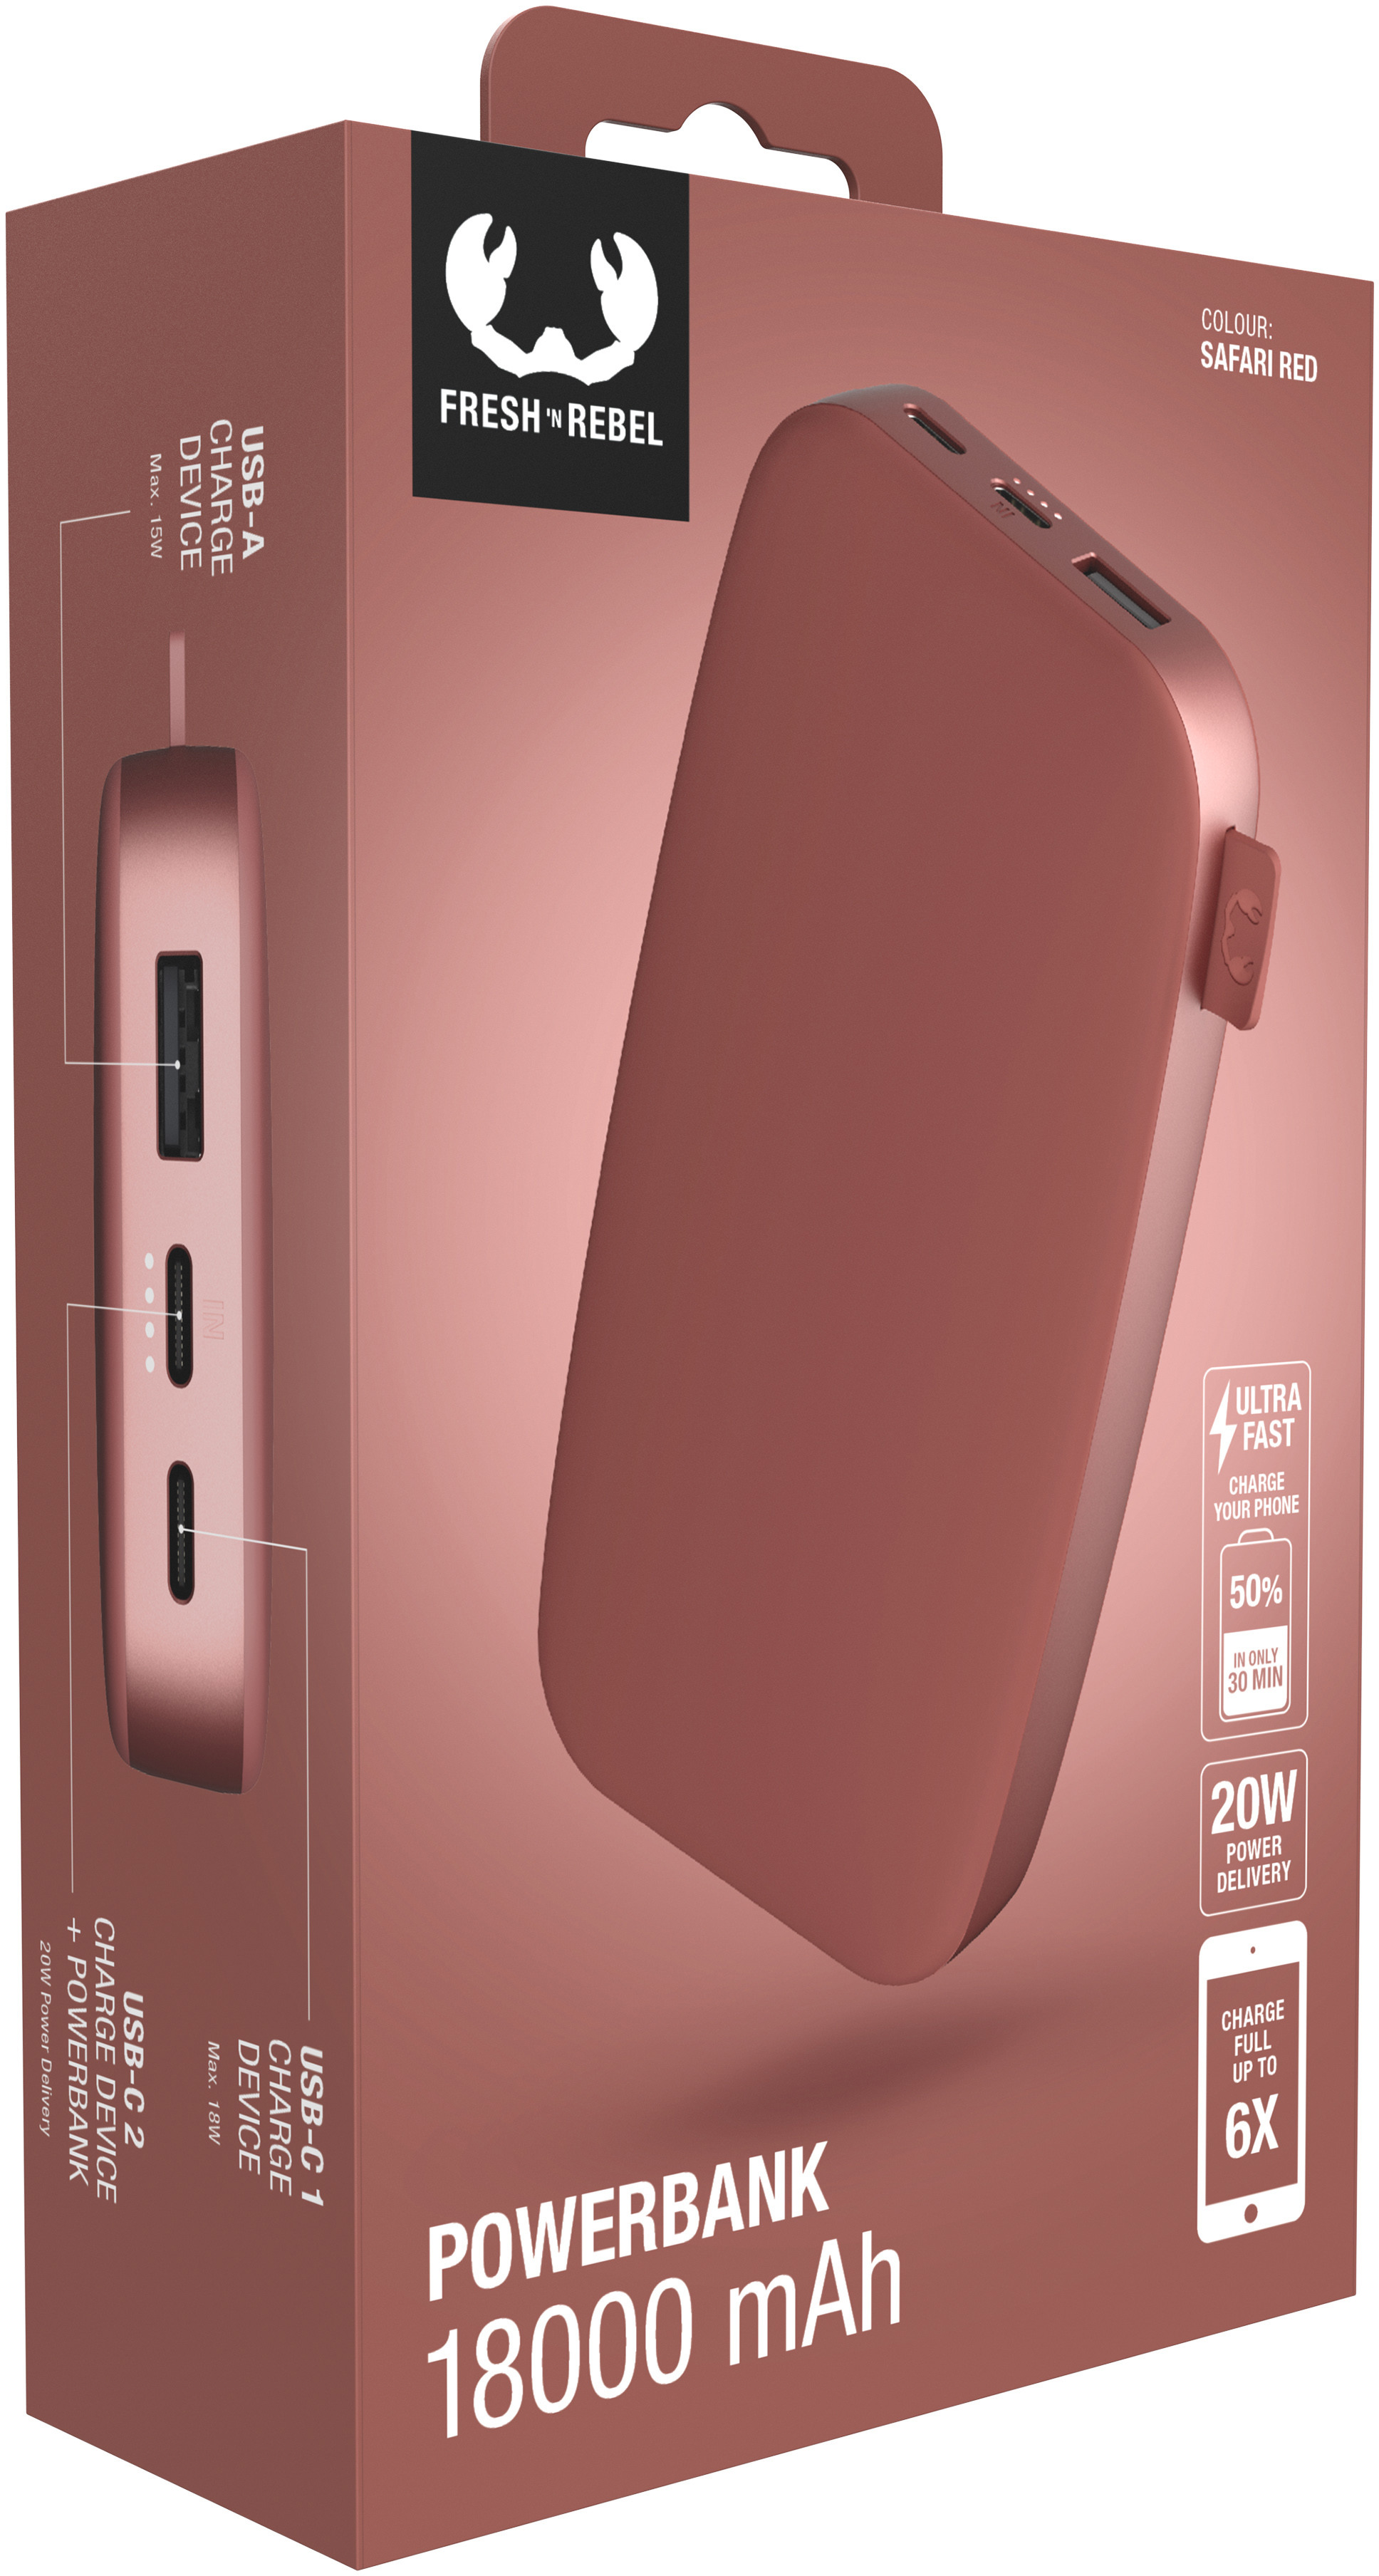 FRESH'N REBEL Powerbank 18000 mAh USB-C UFC 2PB18100SR Safari Red 20w PD